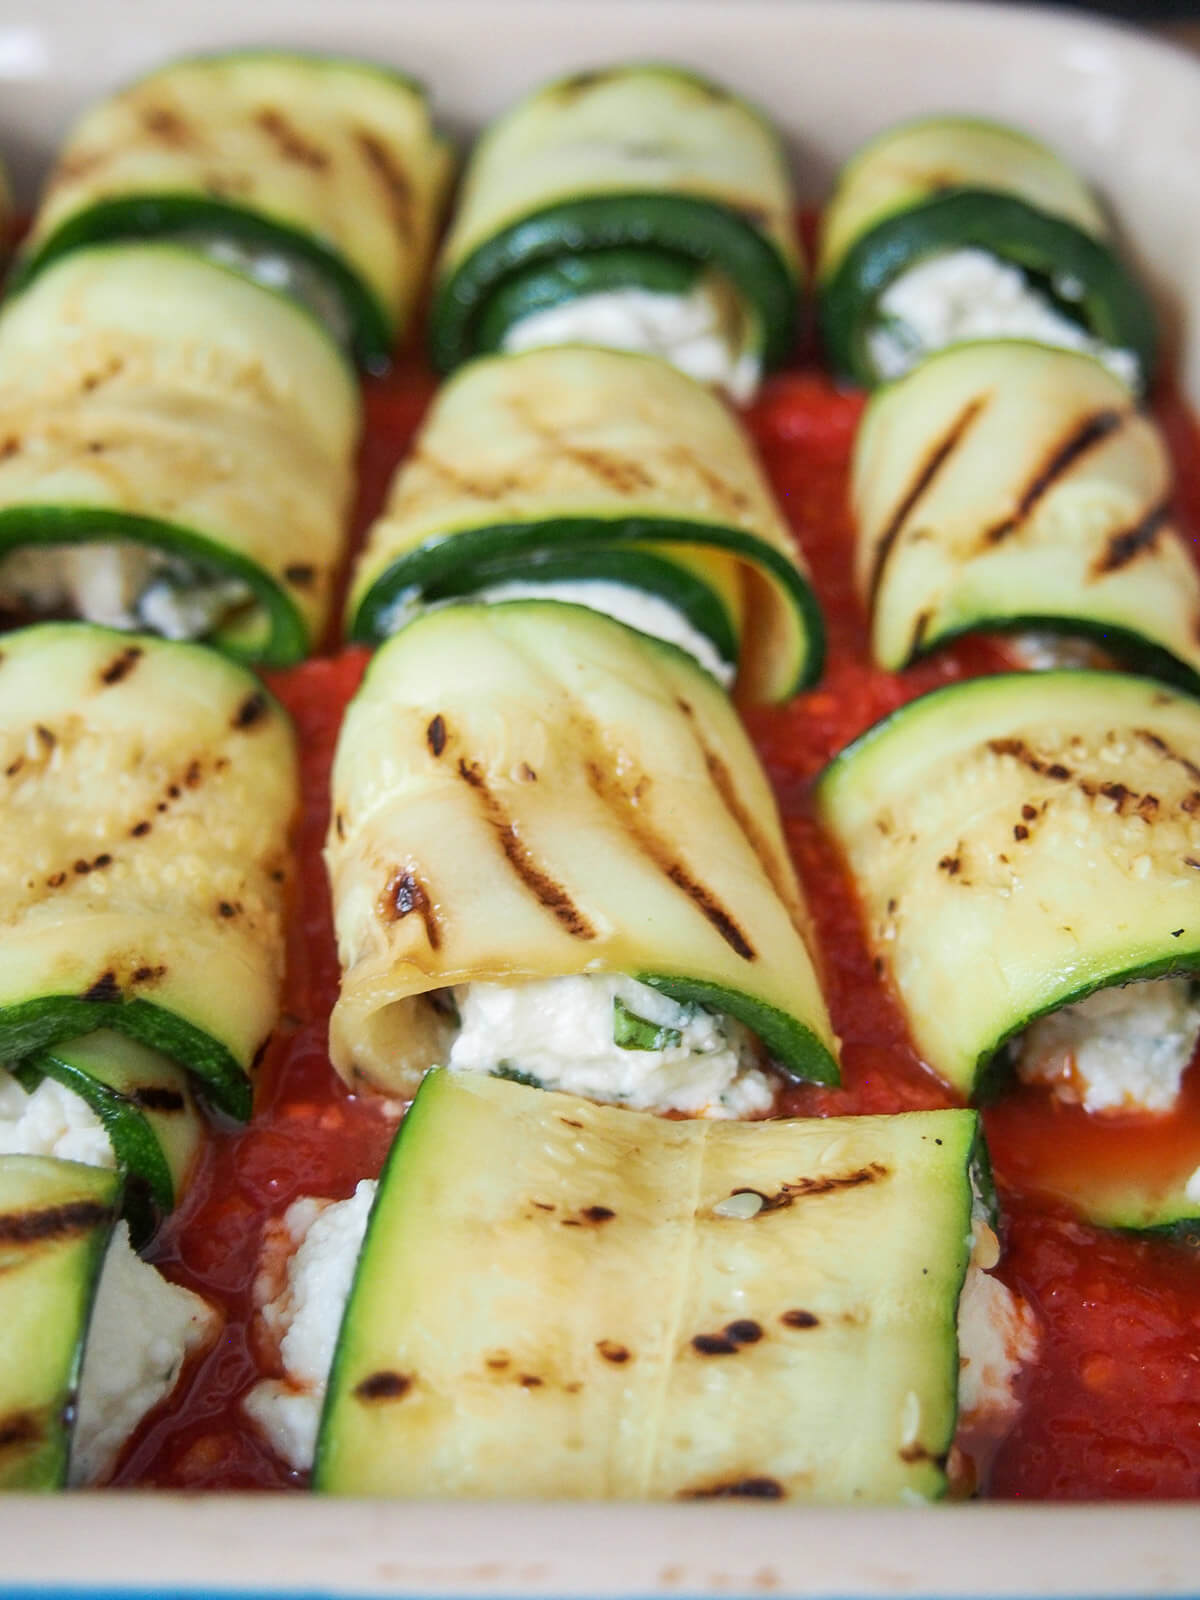 filled zucchini involtini rolls in dish with tomato marinara sauce before baking